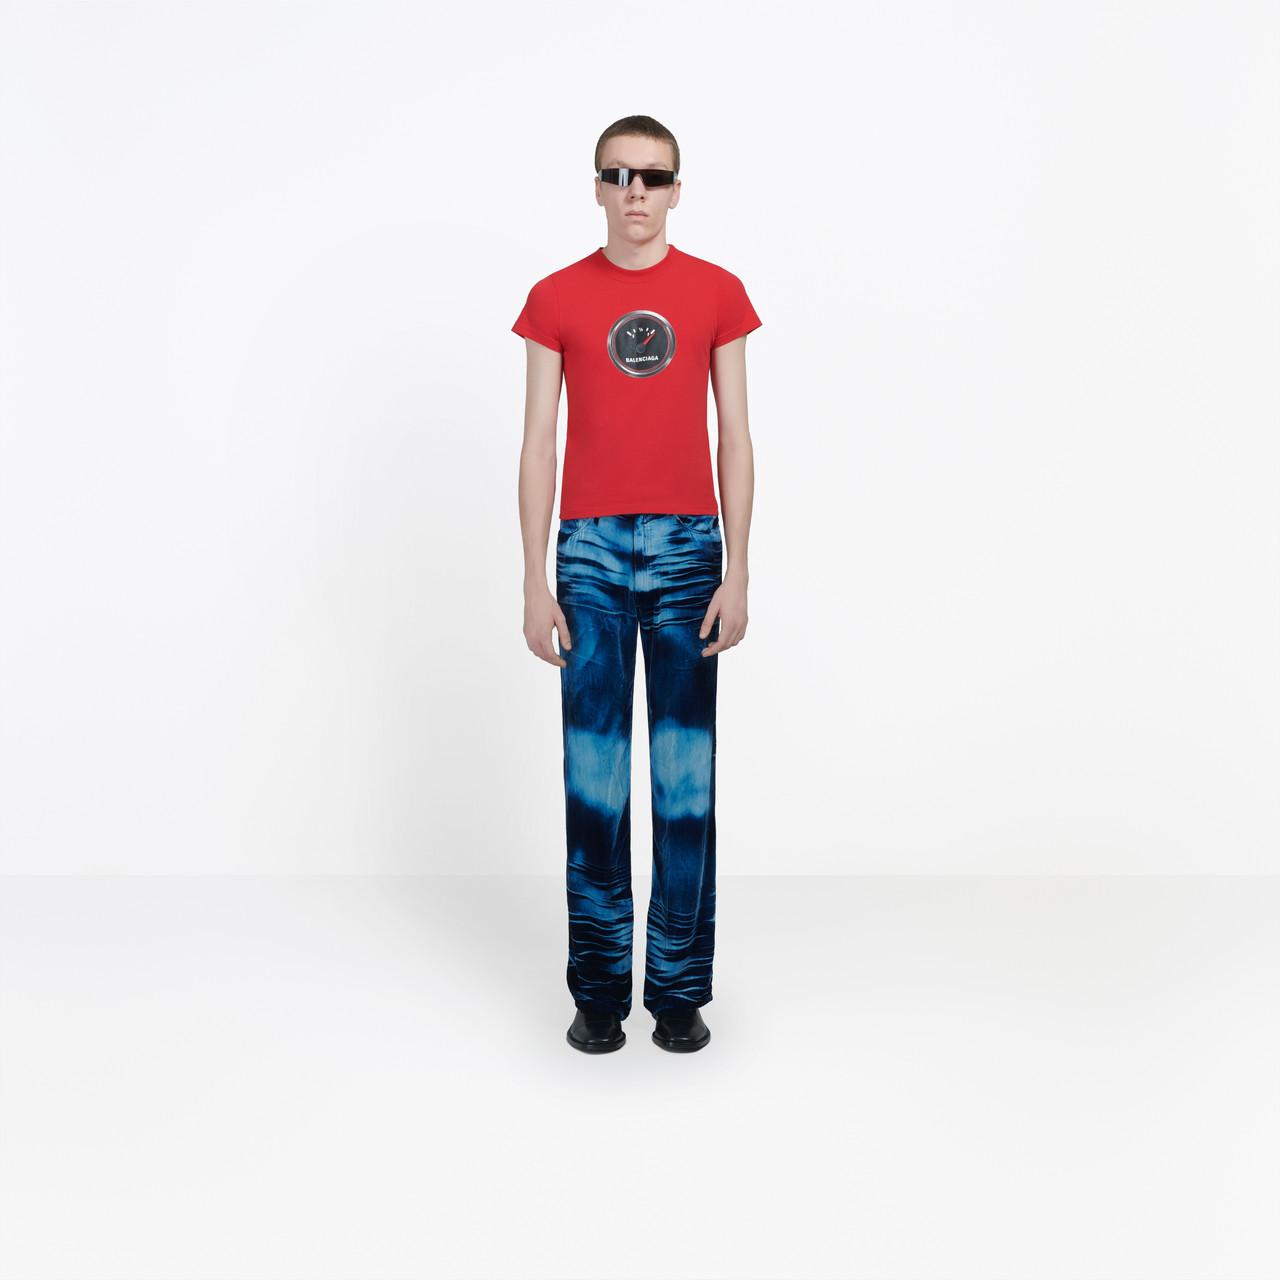 Balenciaga Speed Shrunk T-shirt in Red for Men - Lyst